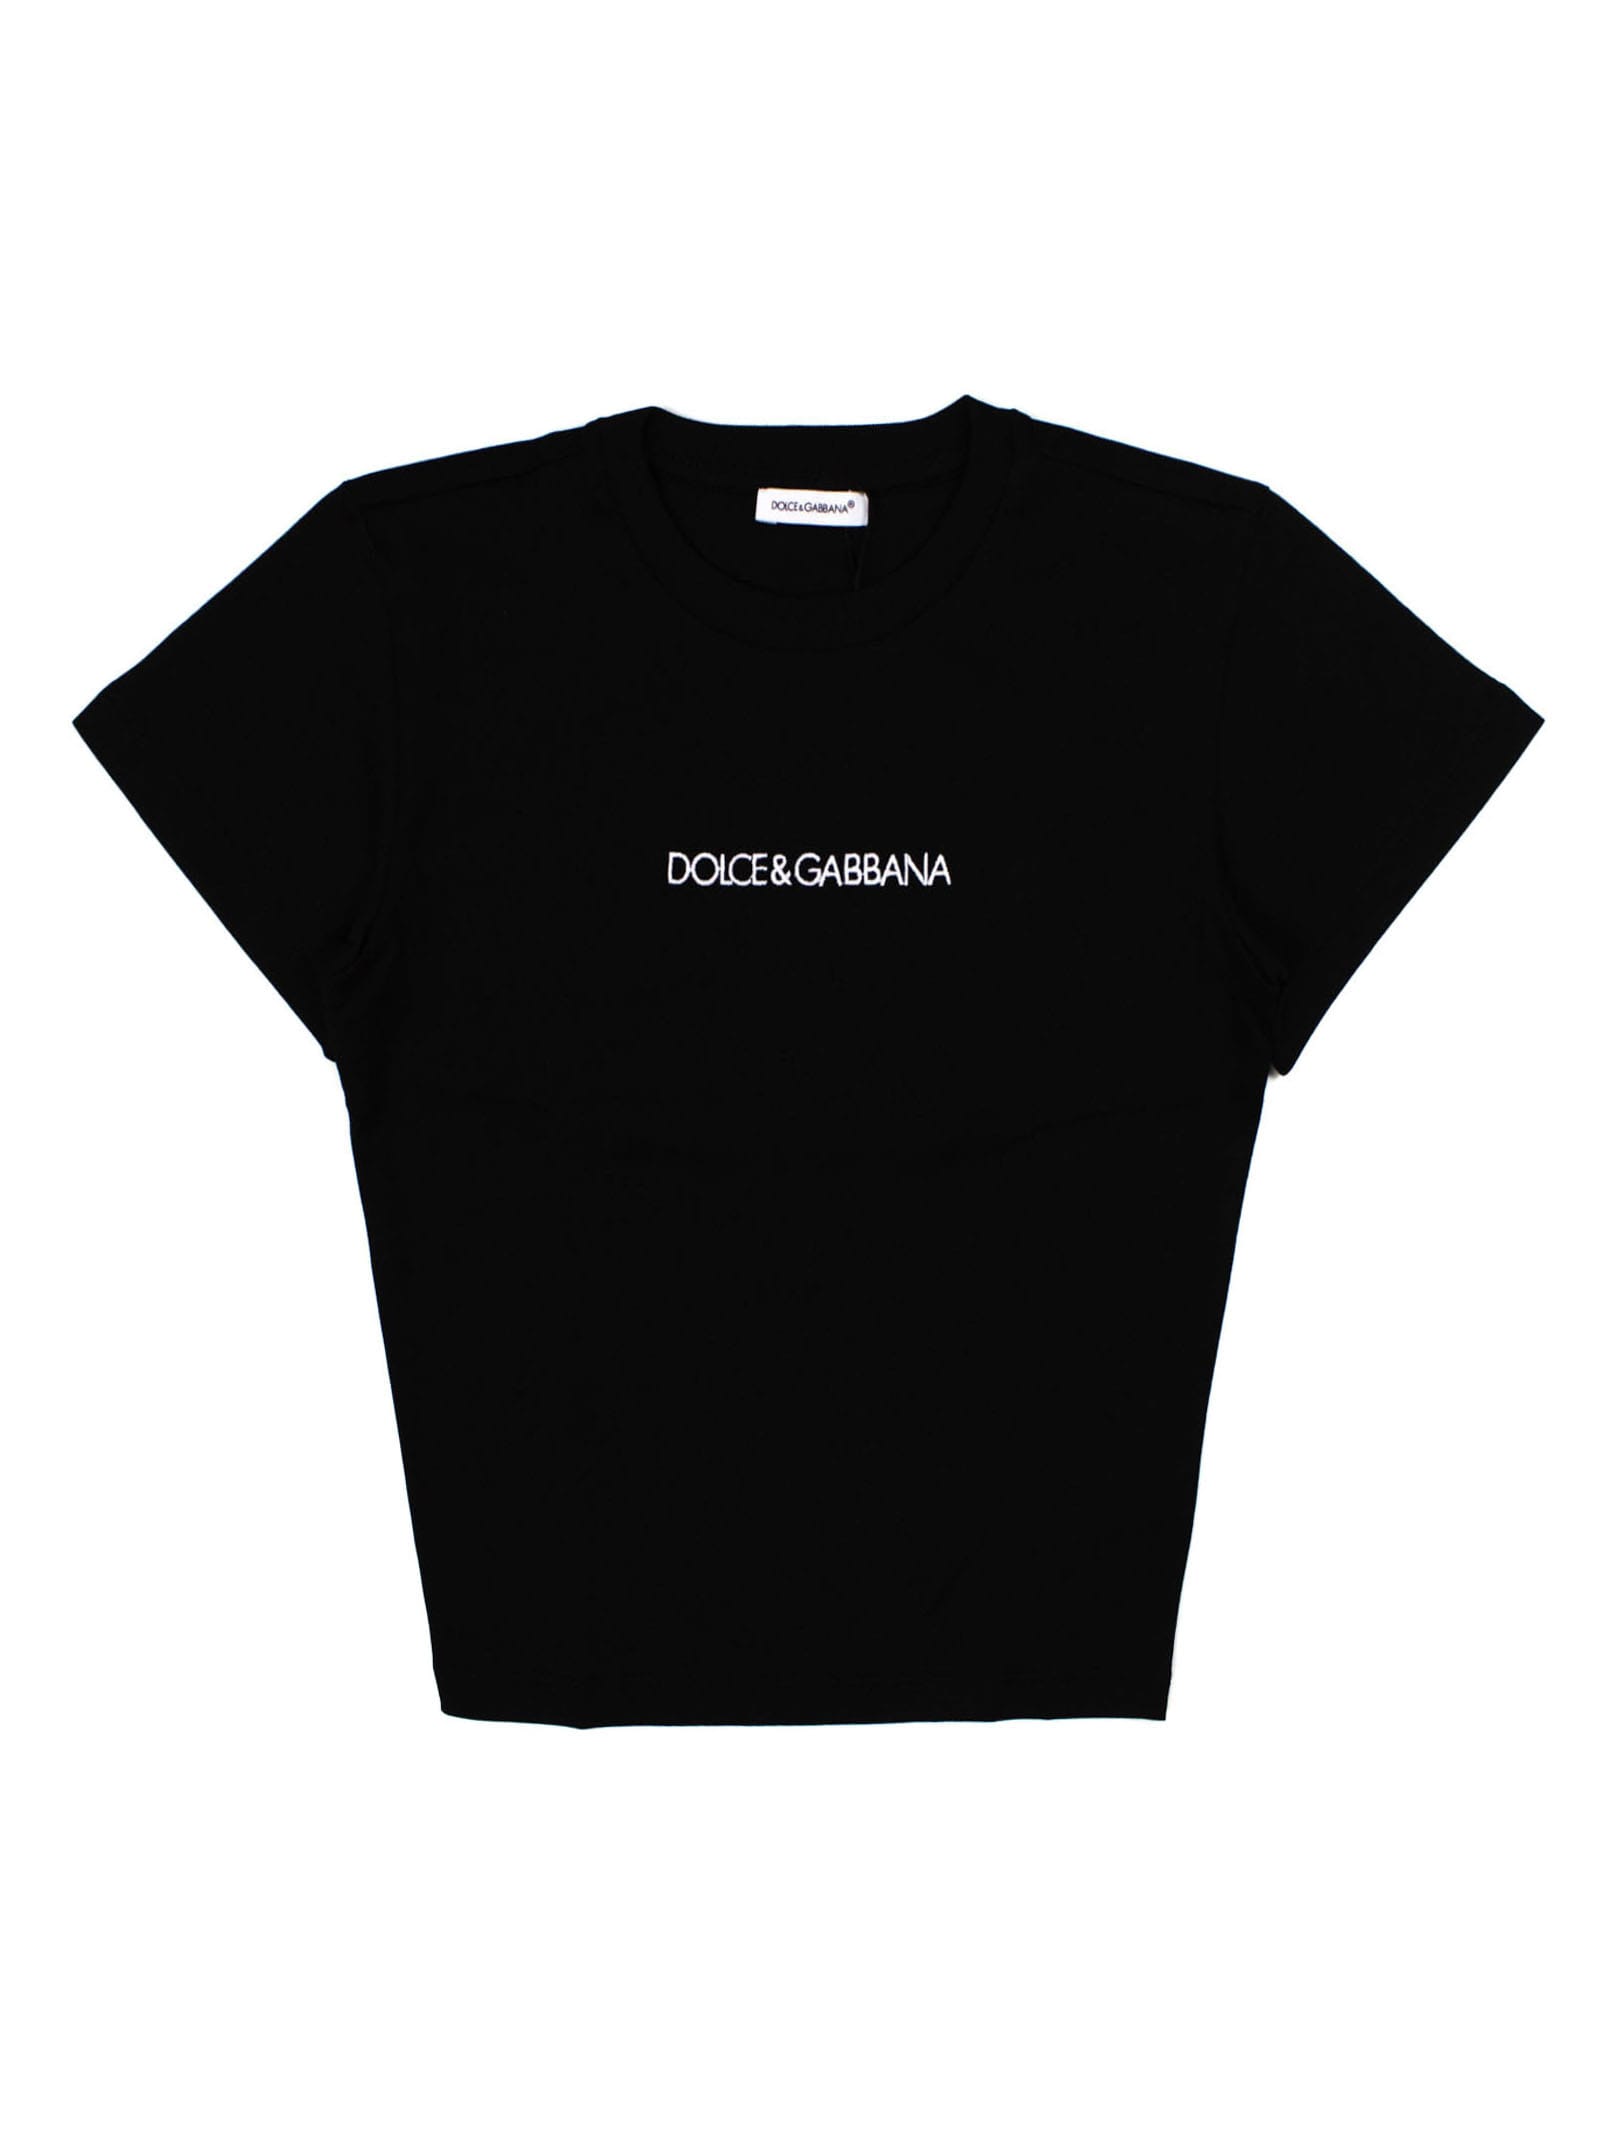 Dolce & Gabbana Black Jersey T-shirt